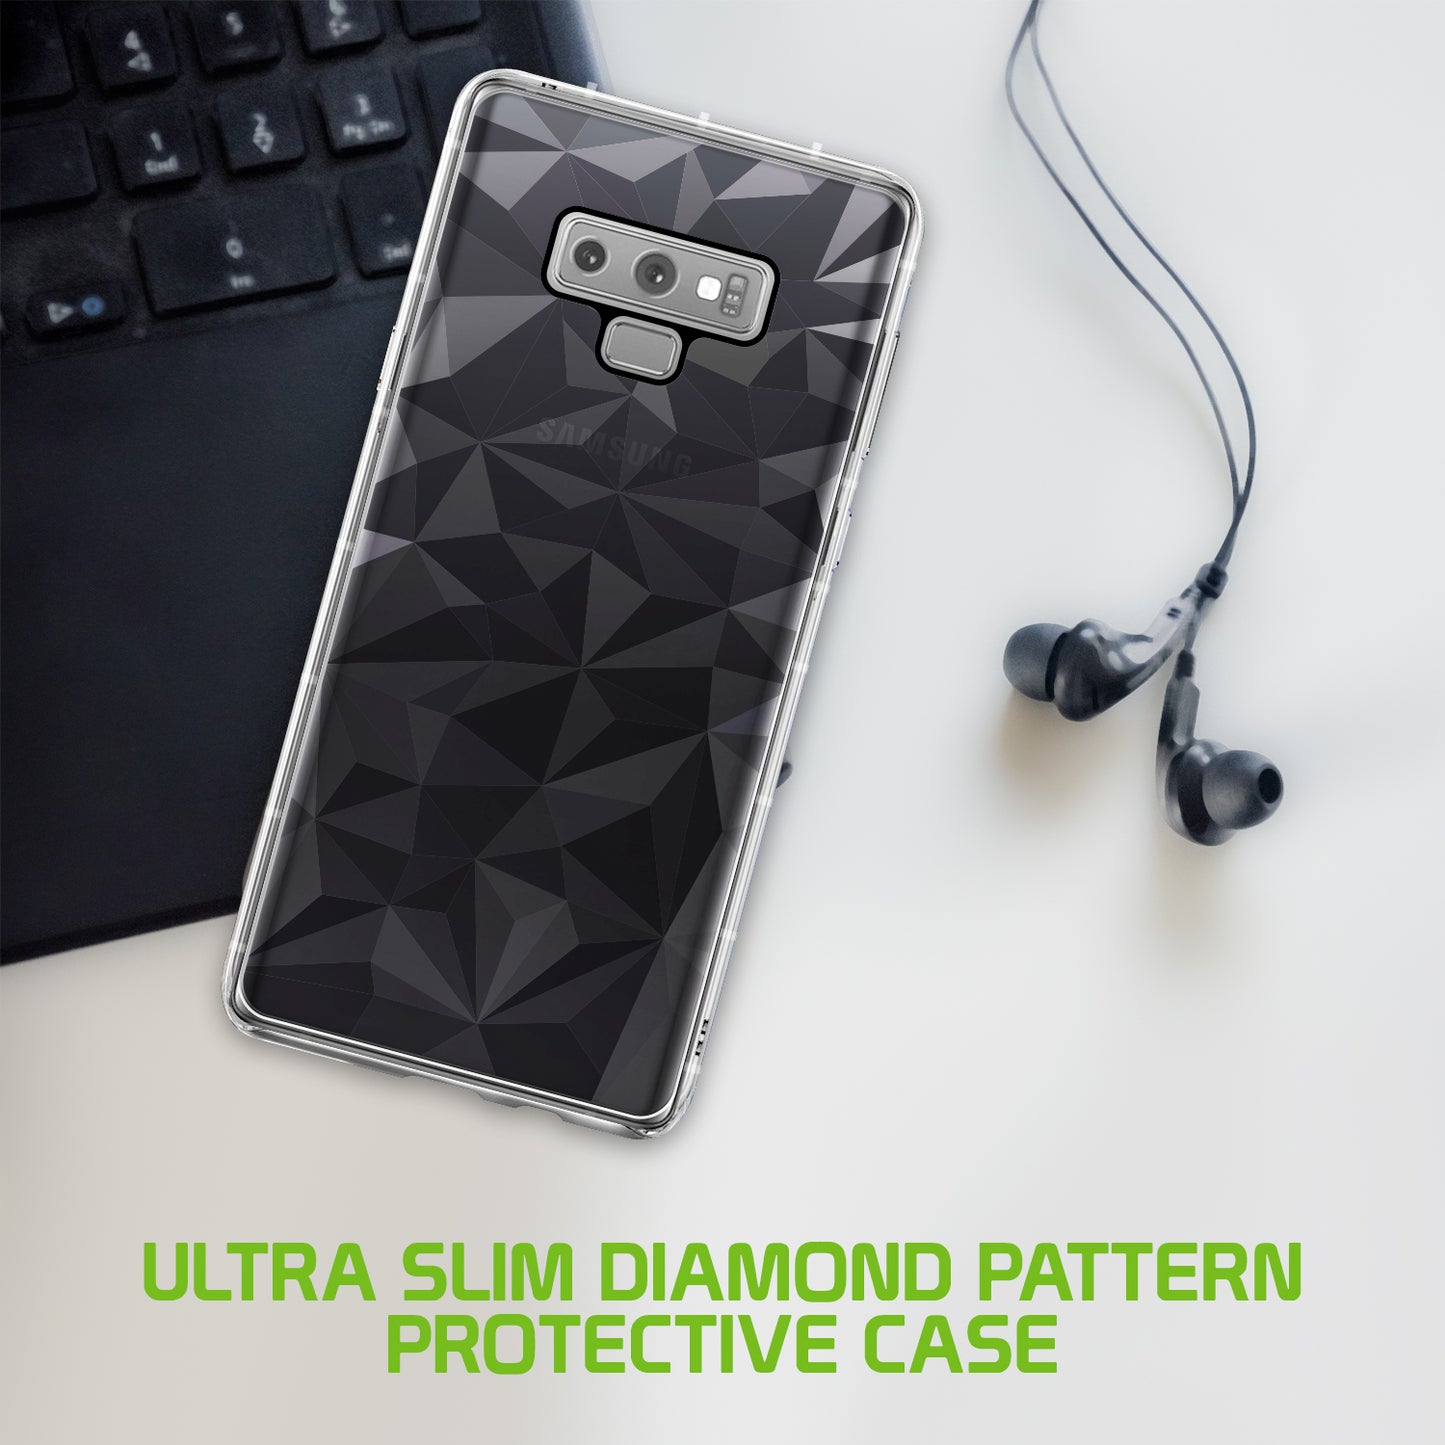 CCSAMN9PGGY - Samsung Galaxy Note 9 Ultra Slim Diamond Pattern Protective Case Cover - Grey